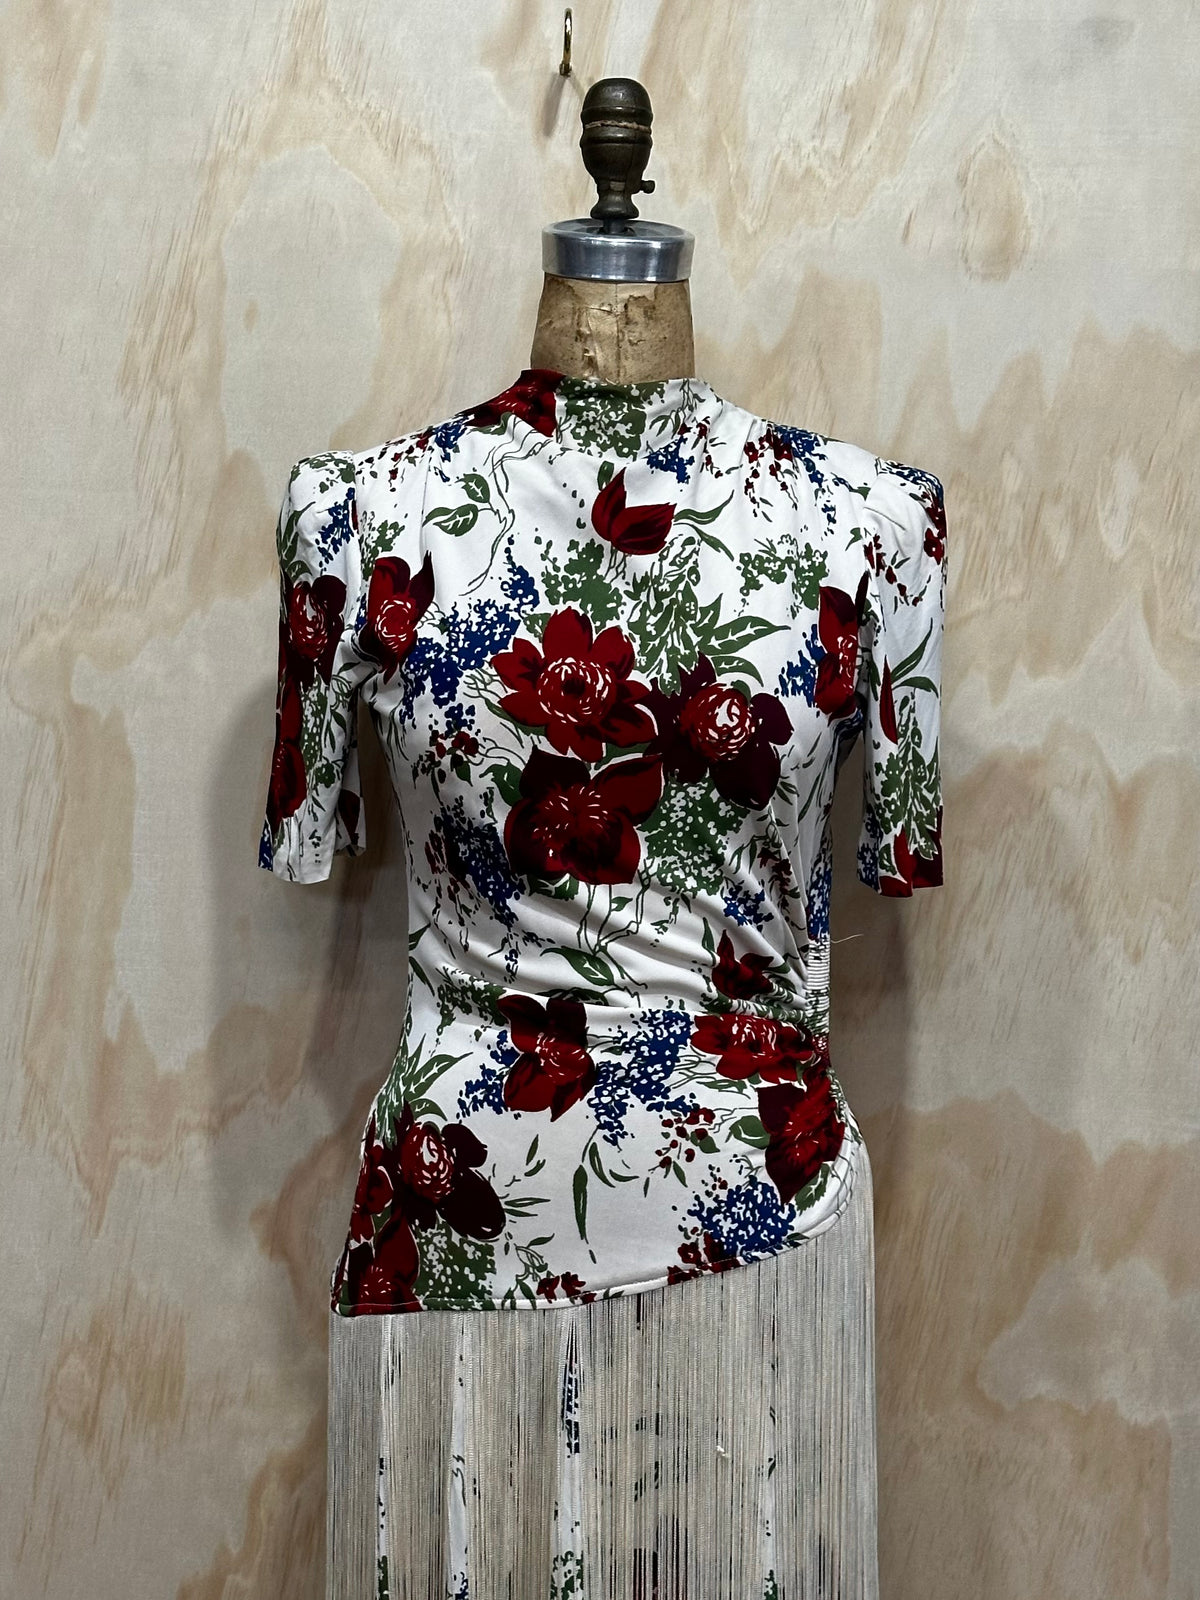 Vintage 70's Floral dress Puff sleeves Fringe dress with tassels